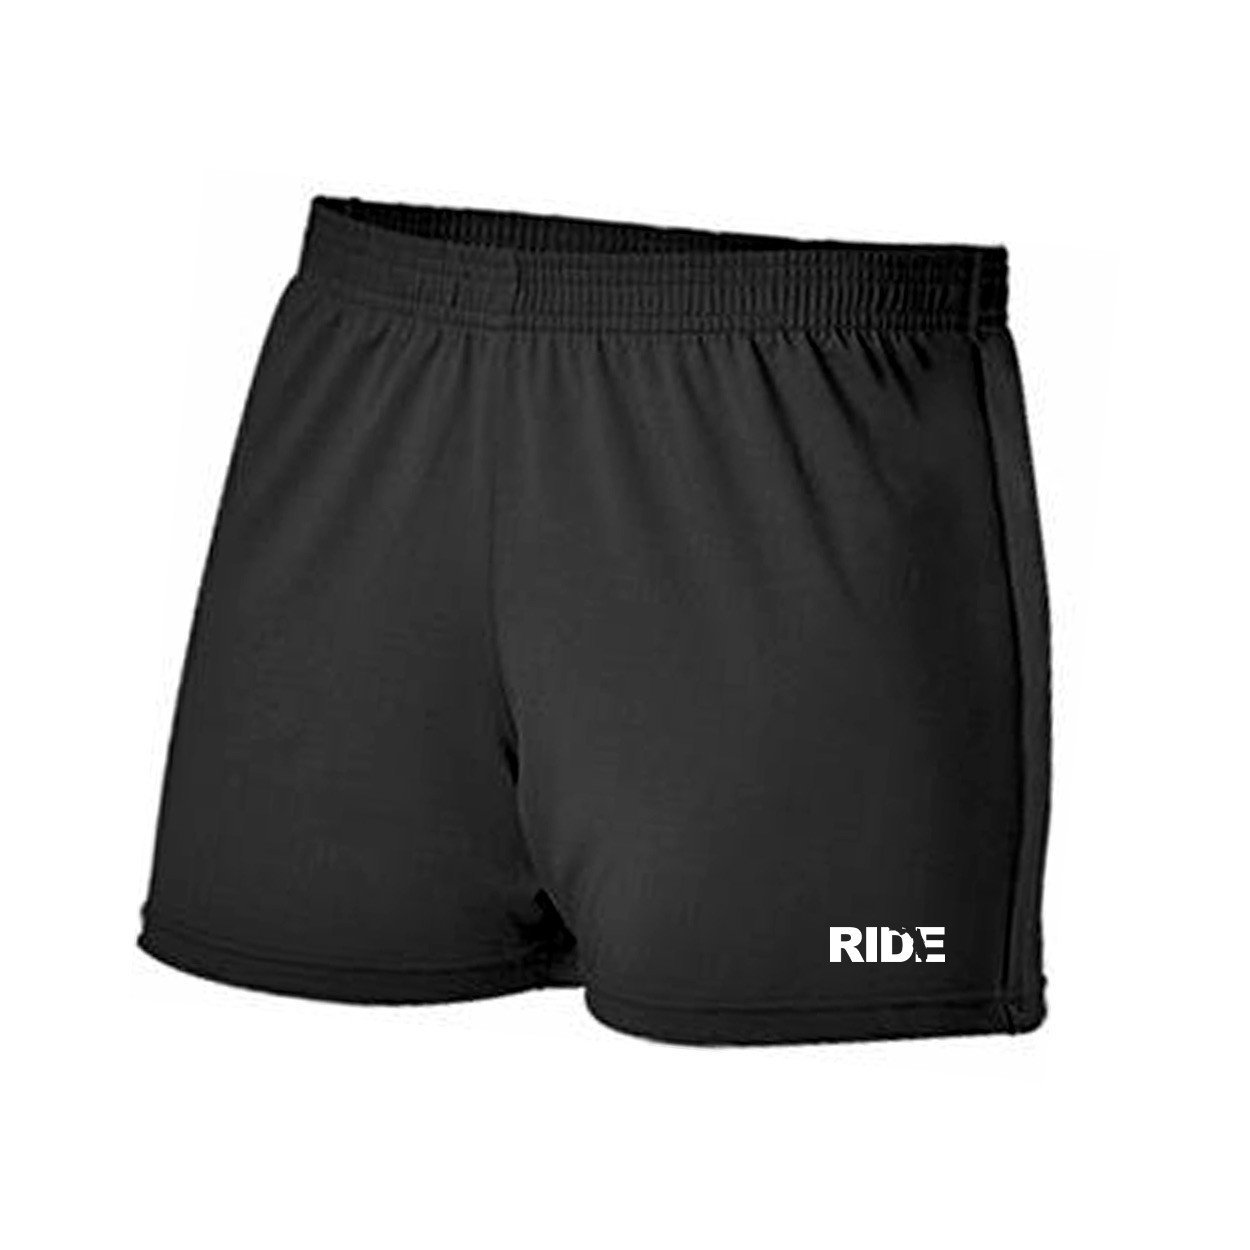 Ride Florida Classic Women's Cheer Shorts Black (White Logo)